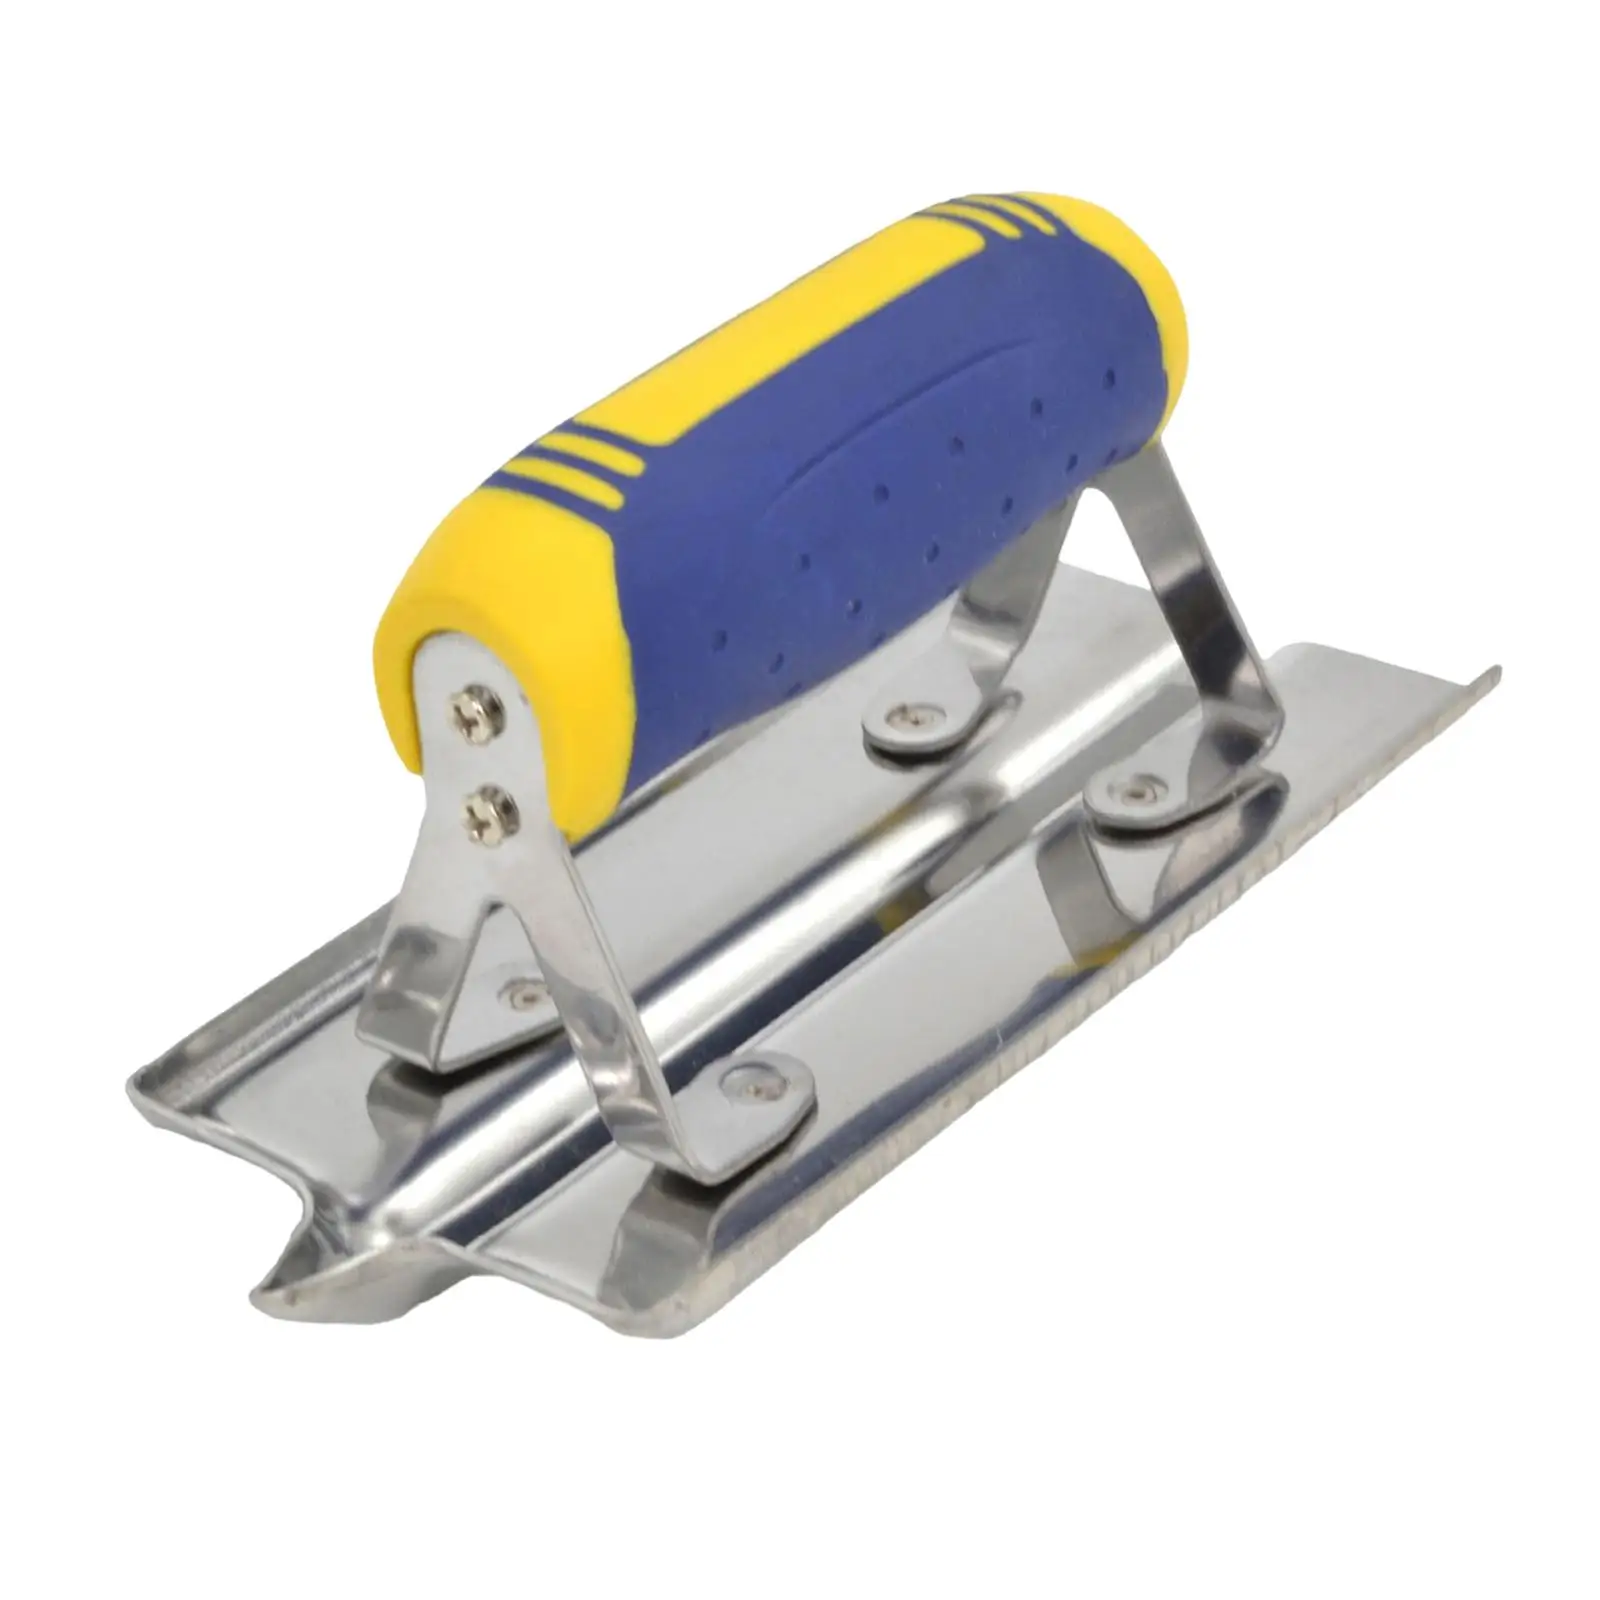 Corner Trowel Stainless Steel Professional Premium Hand Tool for Scraping